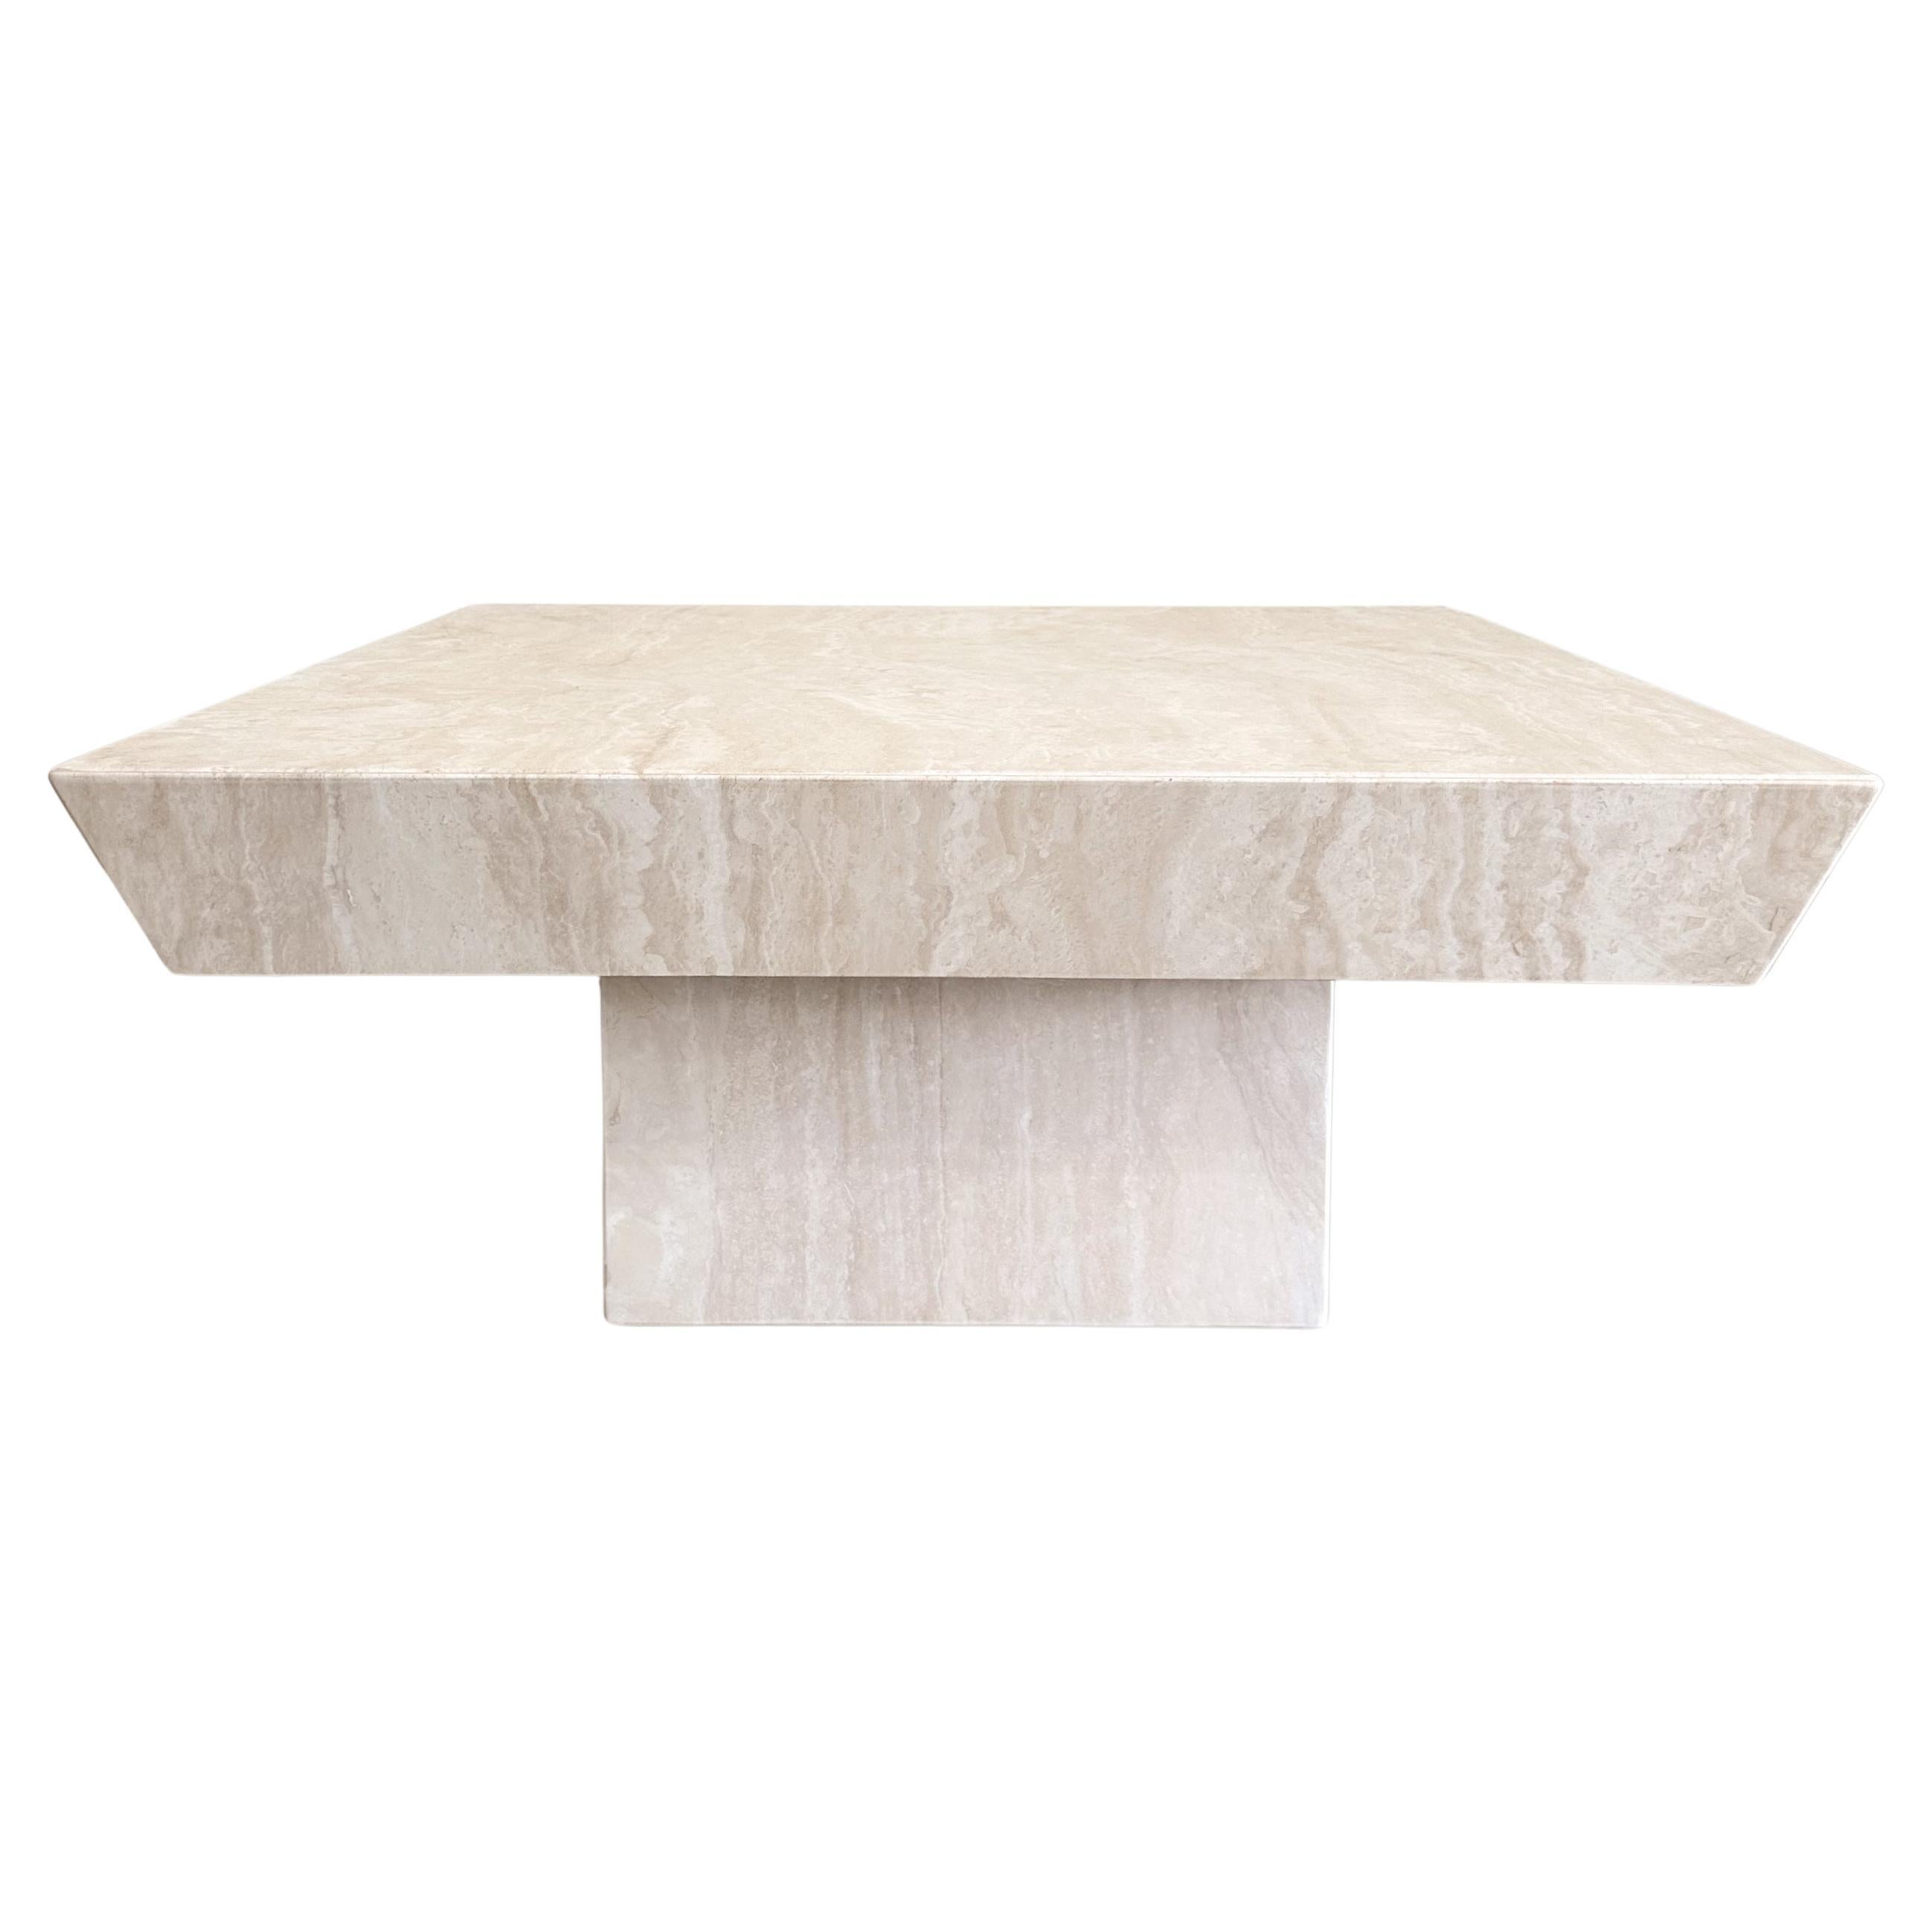 Table basse carrée en pierre de travertin marbrée postmoderne MCM Retro Minimal